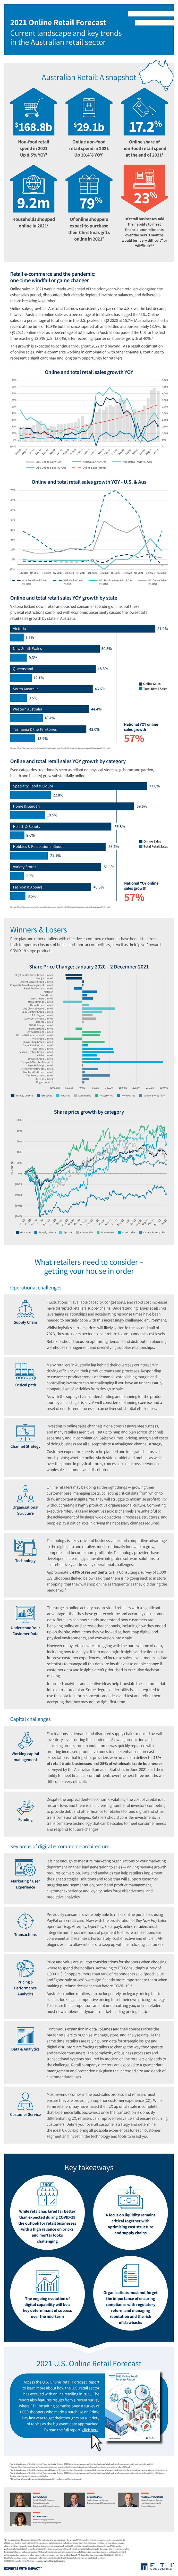 2021 Online Retail Forecast